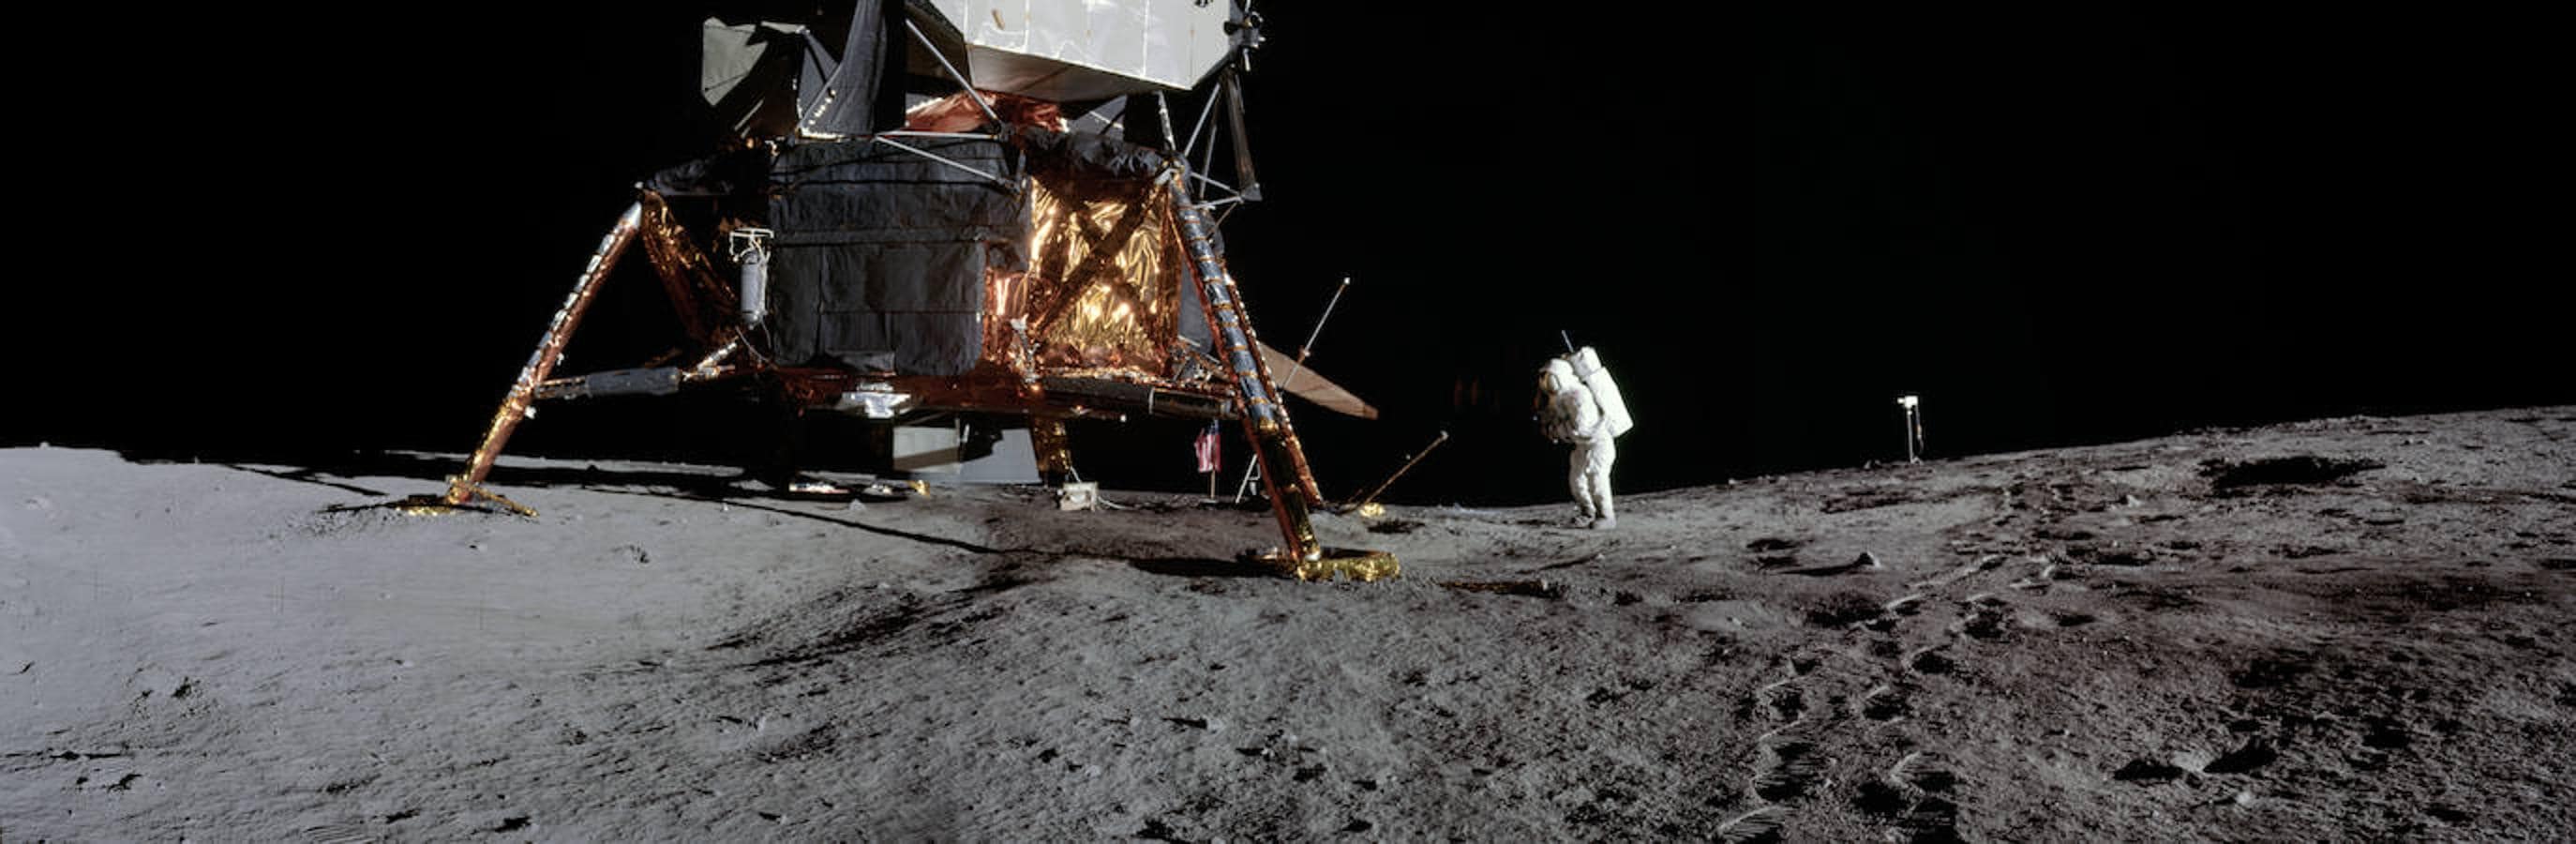 Un astronauta estadounidense pisa la superficie lunar. 